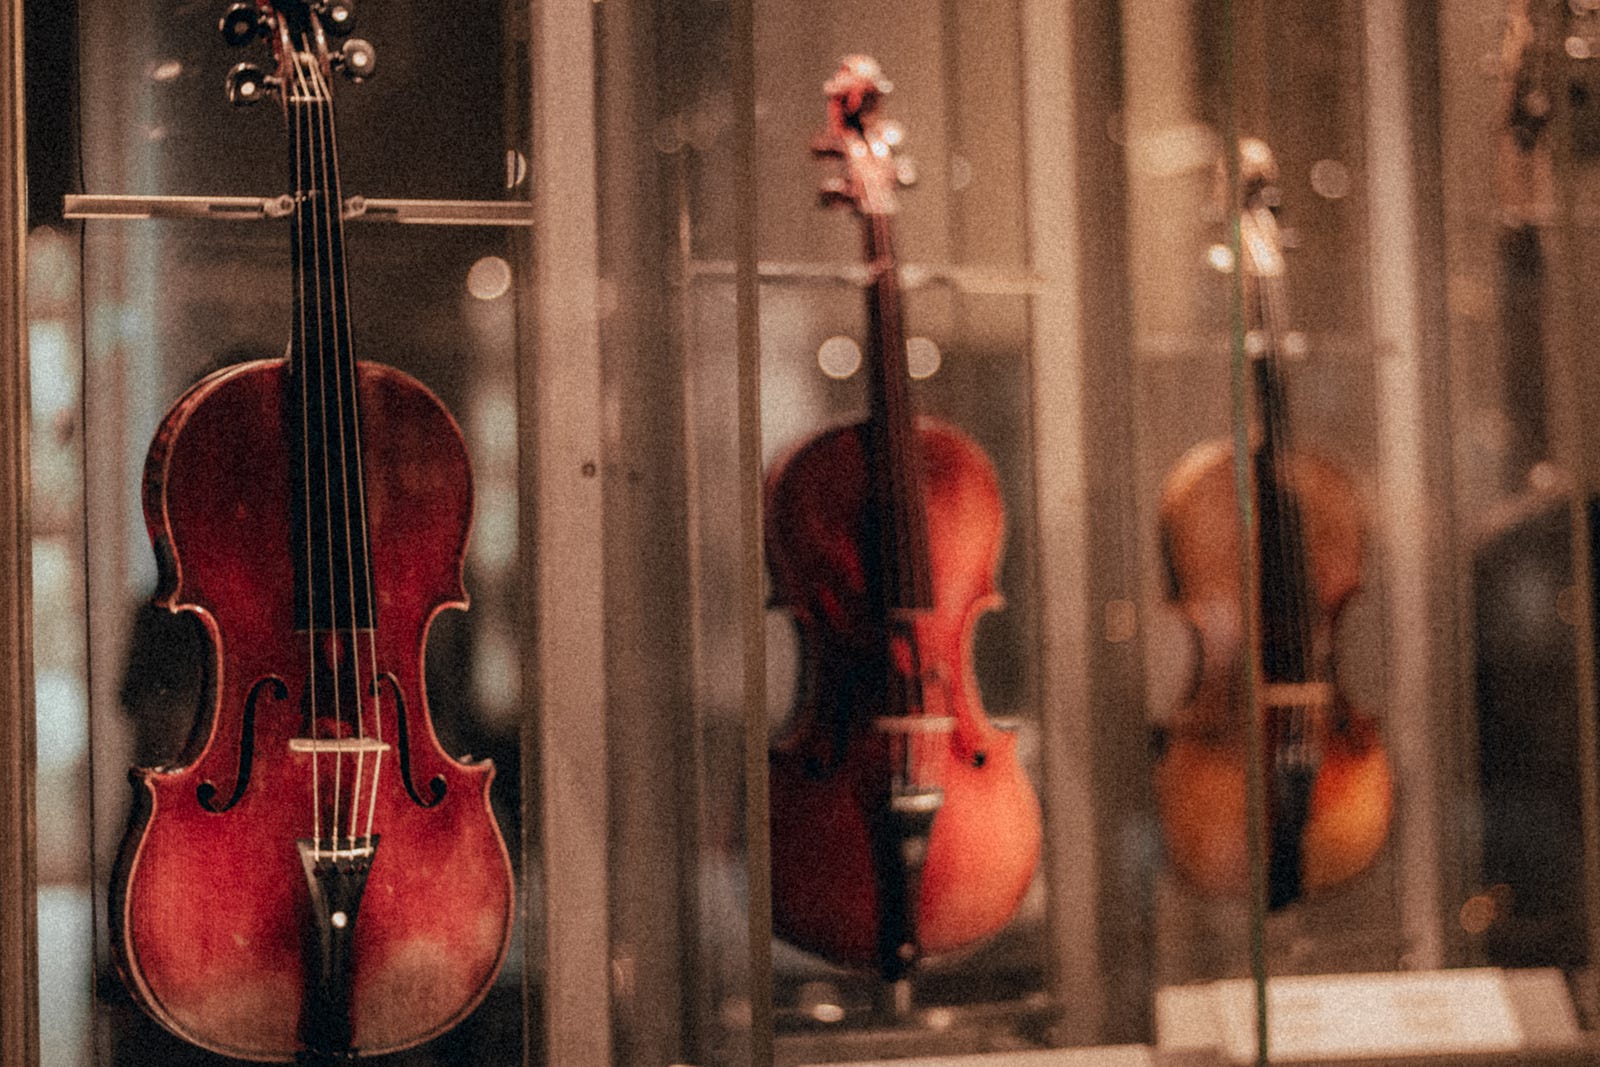 Violins in a glass vitrin